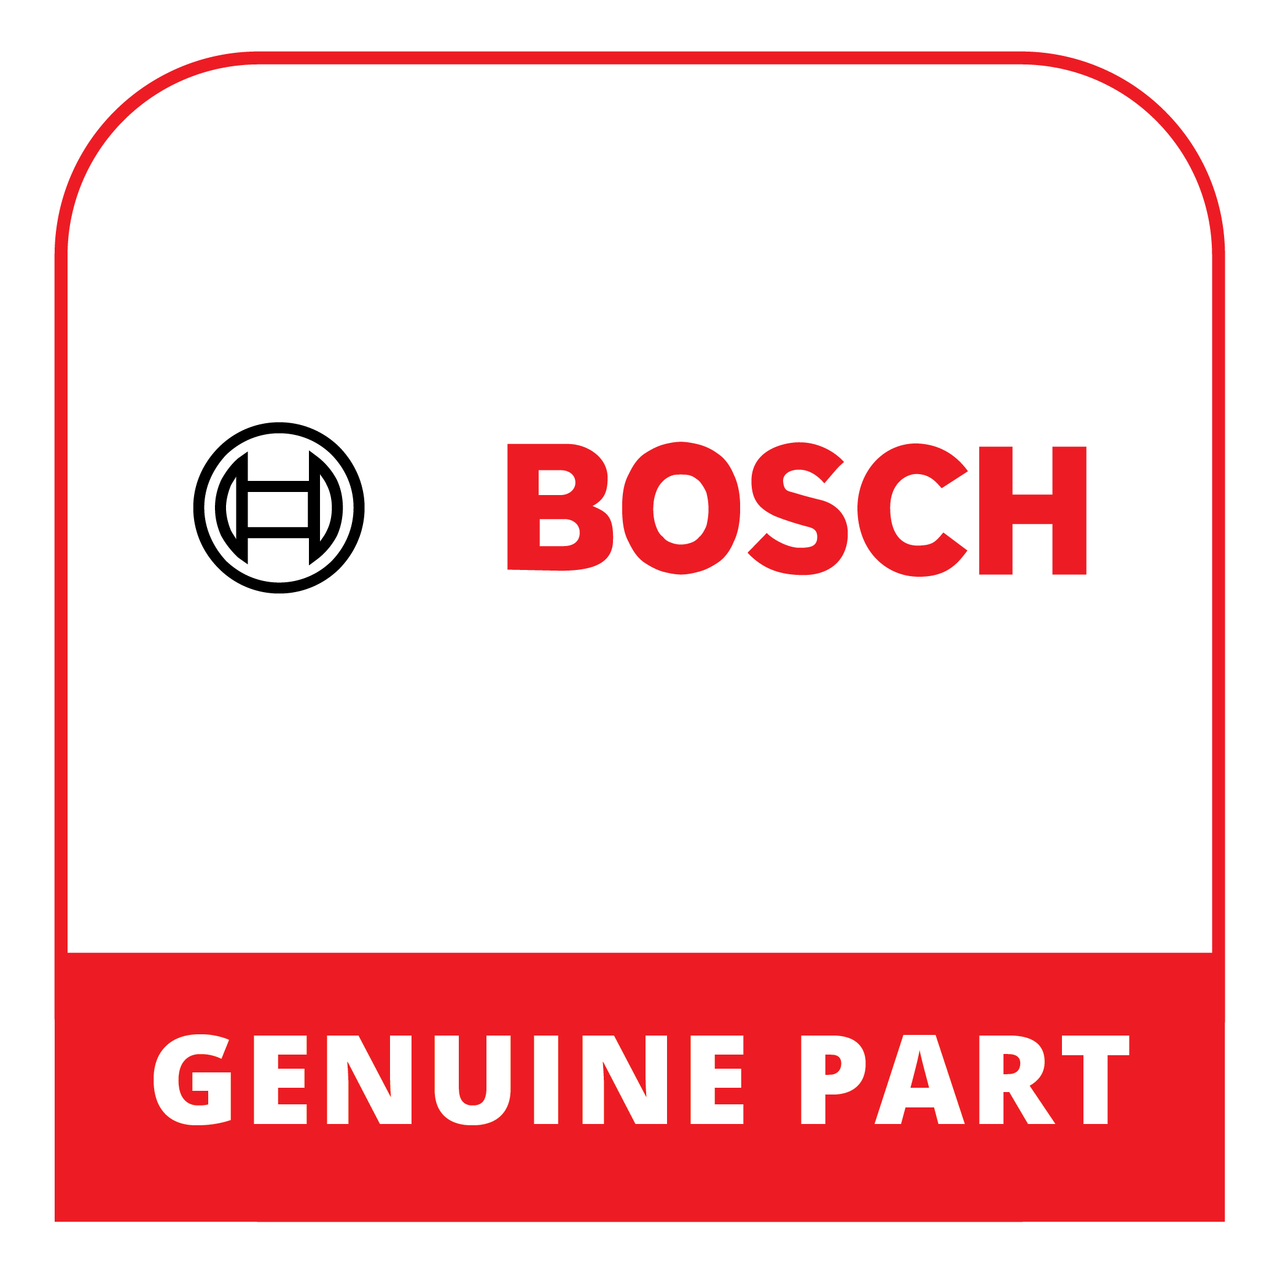 Bosch (Thermador) 00778444 - Strip-Decor - Genuine Bosch (Thermador) Part